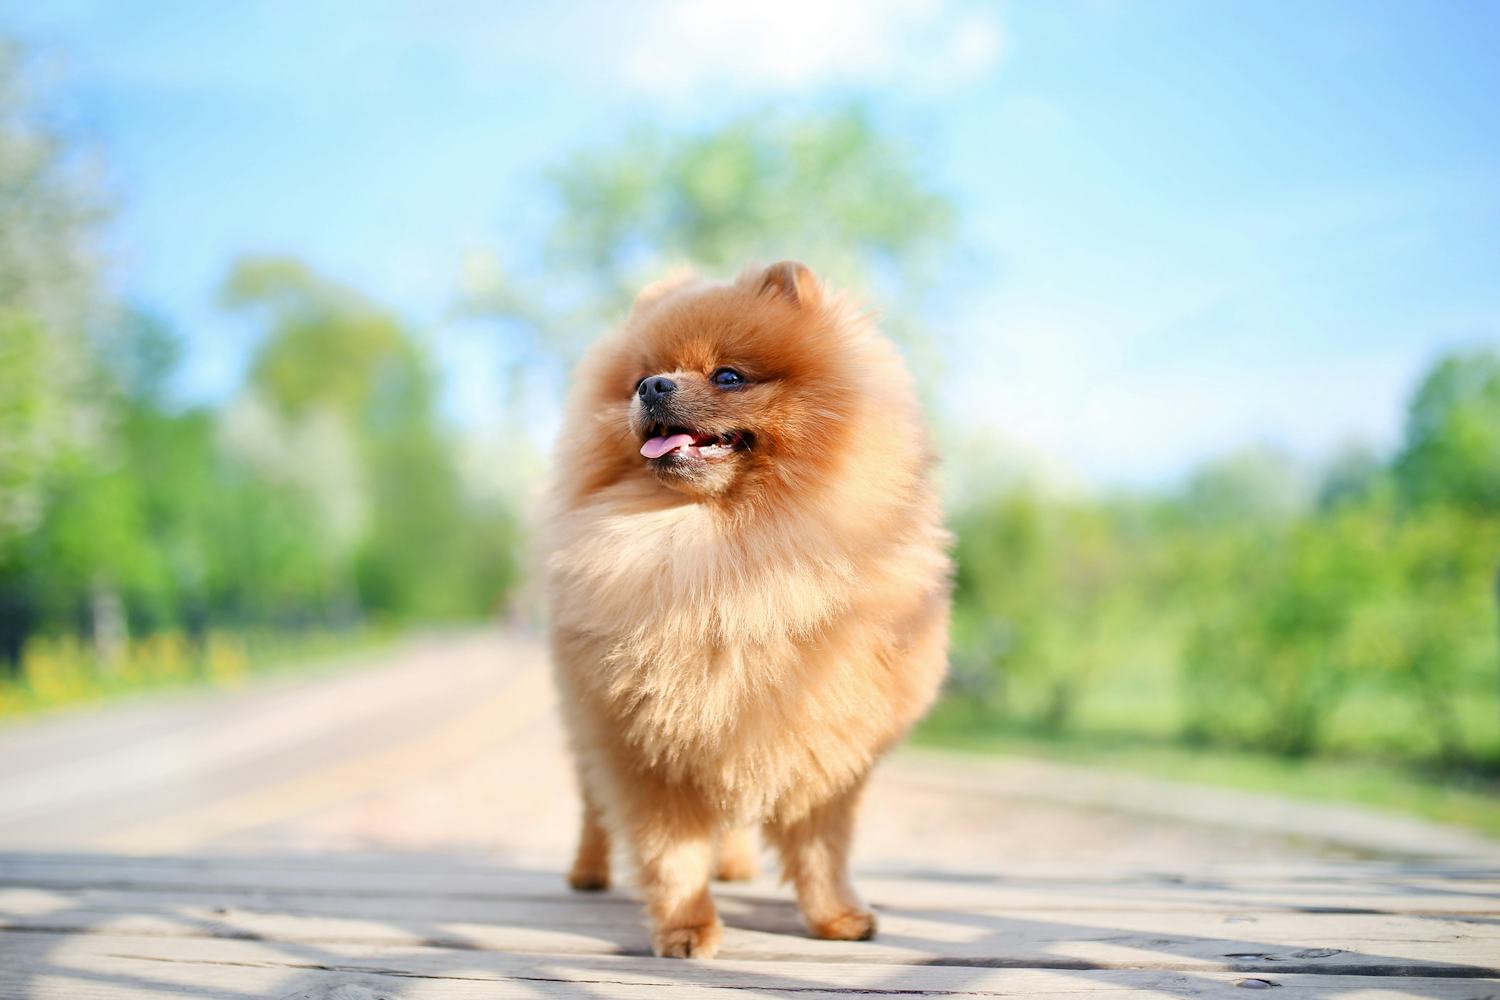 Secondary image of Pomeranian dog breed